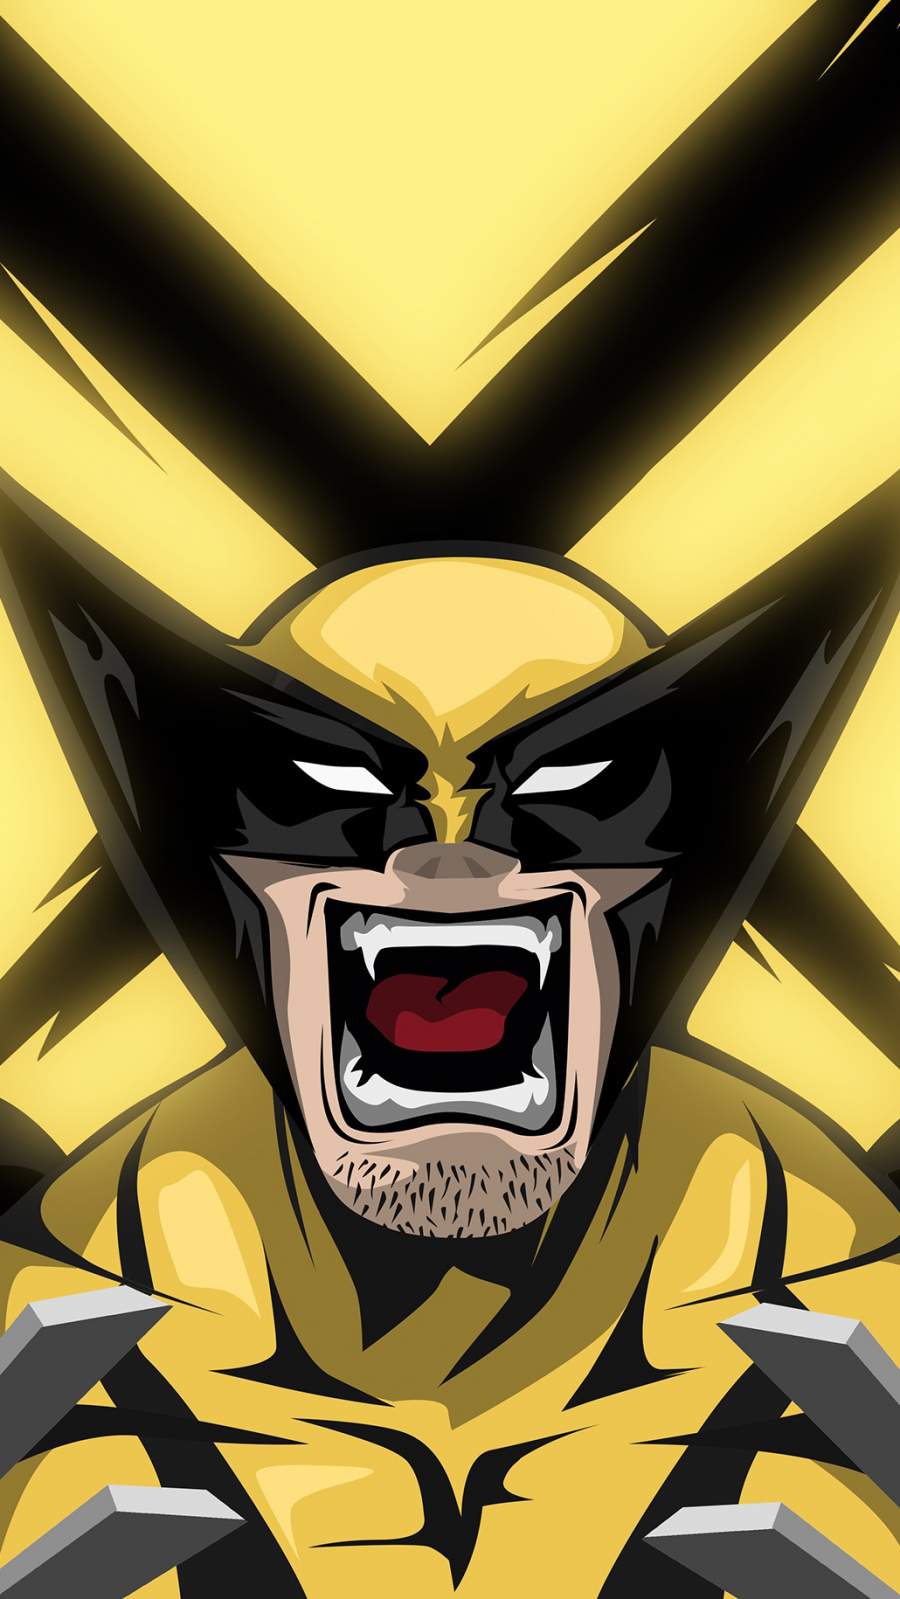 The Wolverine X Men Iphone Wallpaper Iphone Wallpapers Iphone Wallpapers